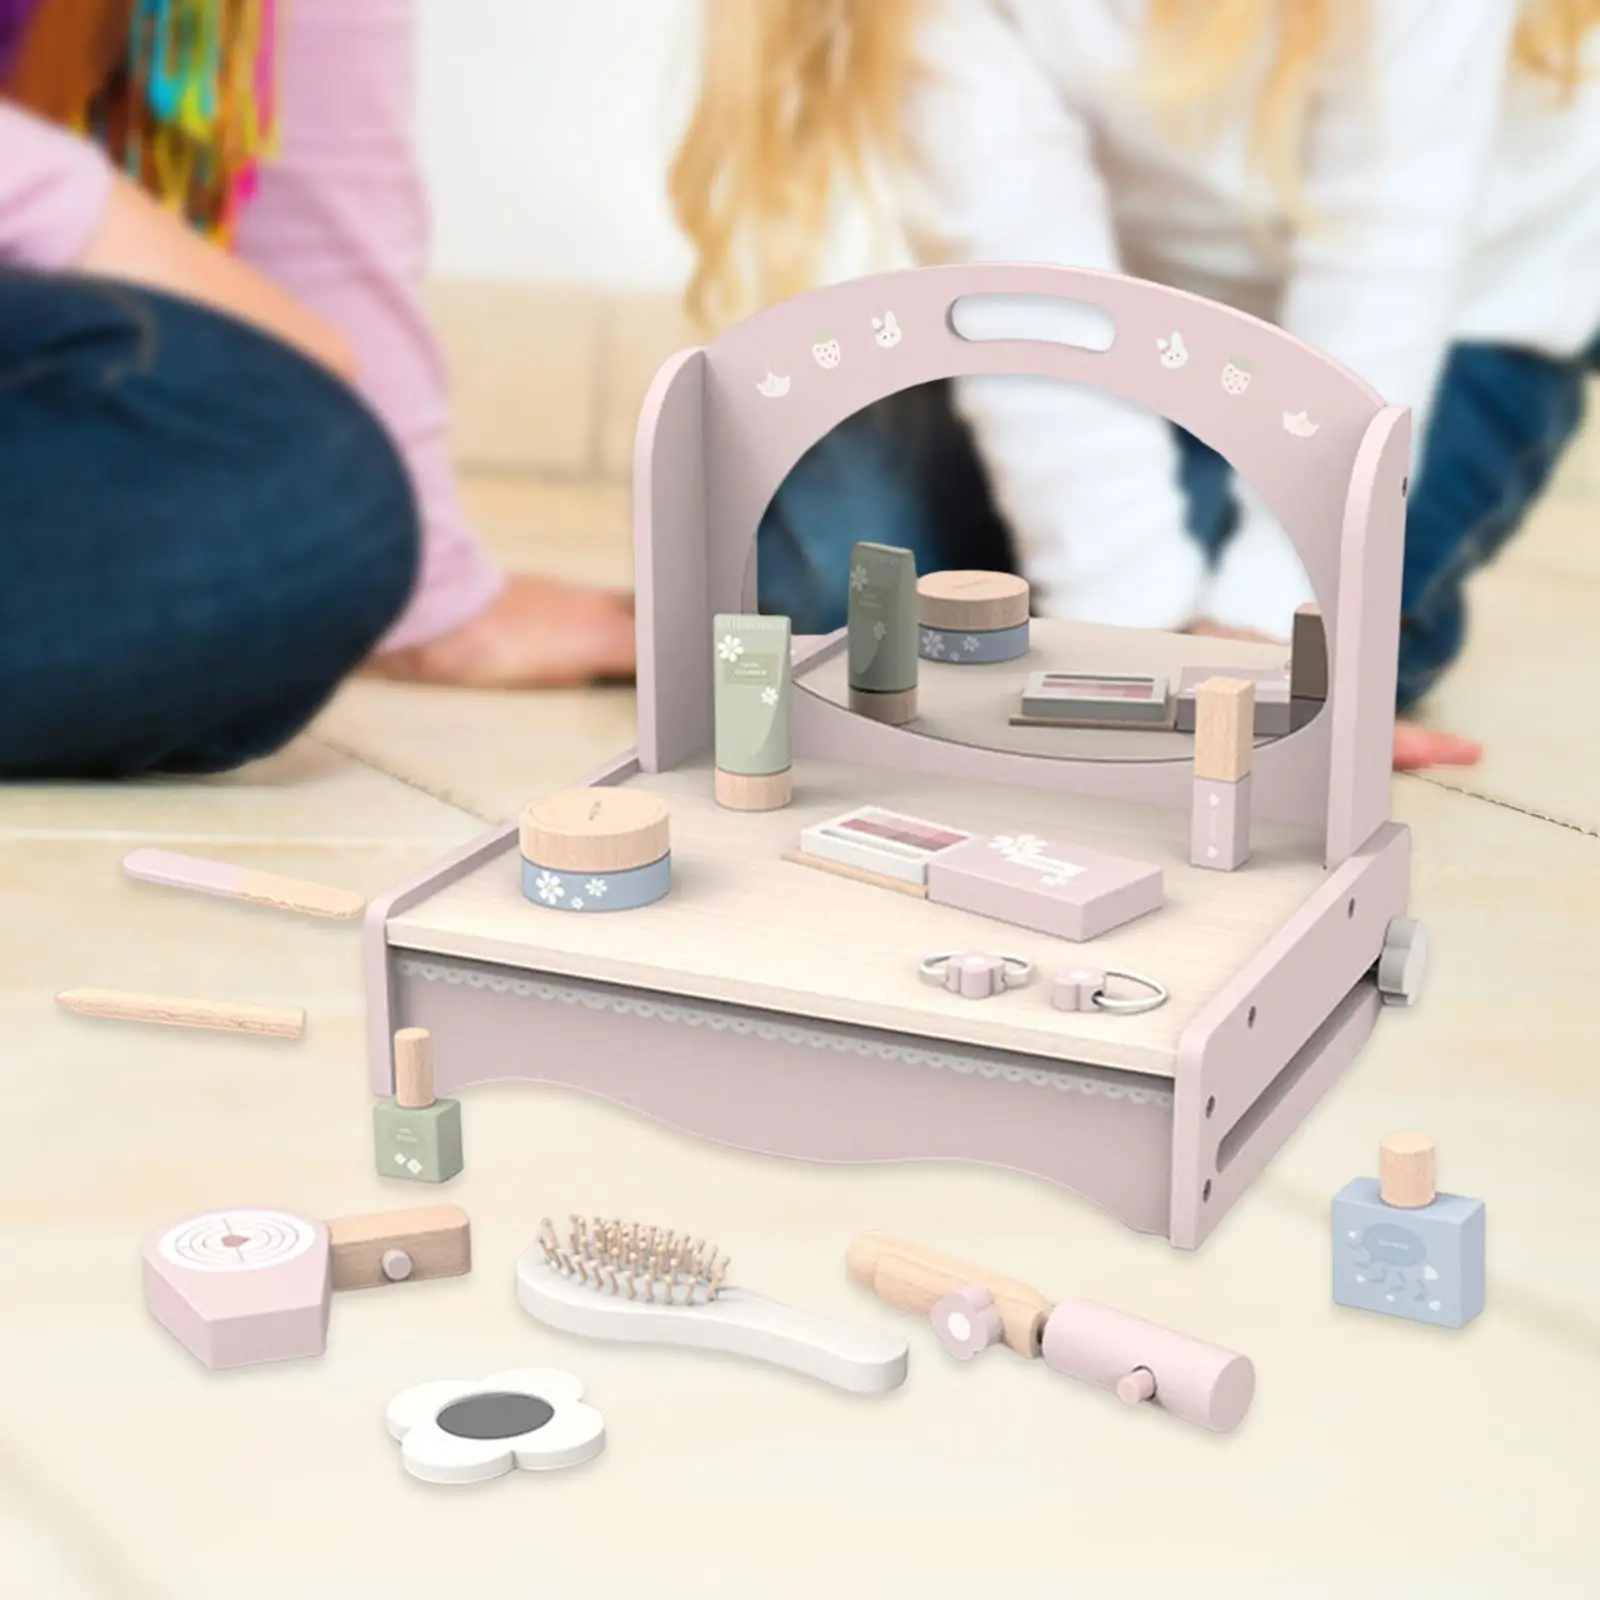 Wood Kids Play Vanity toy Vanity Table Simulation Play Room Learning